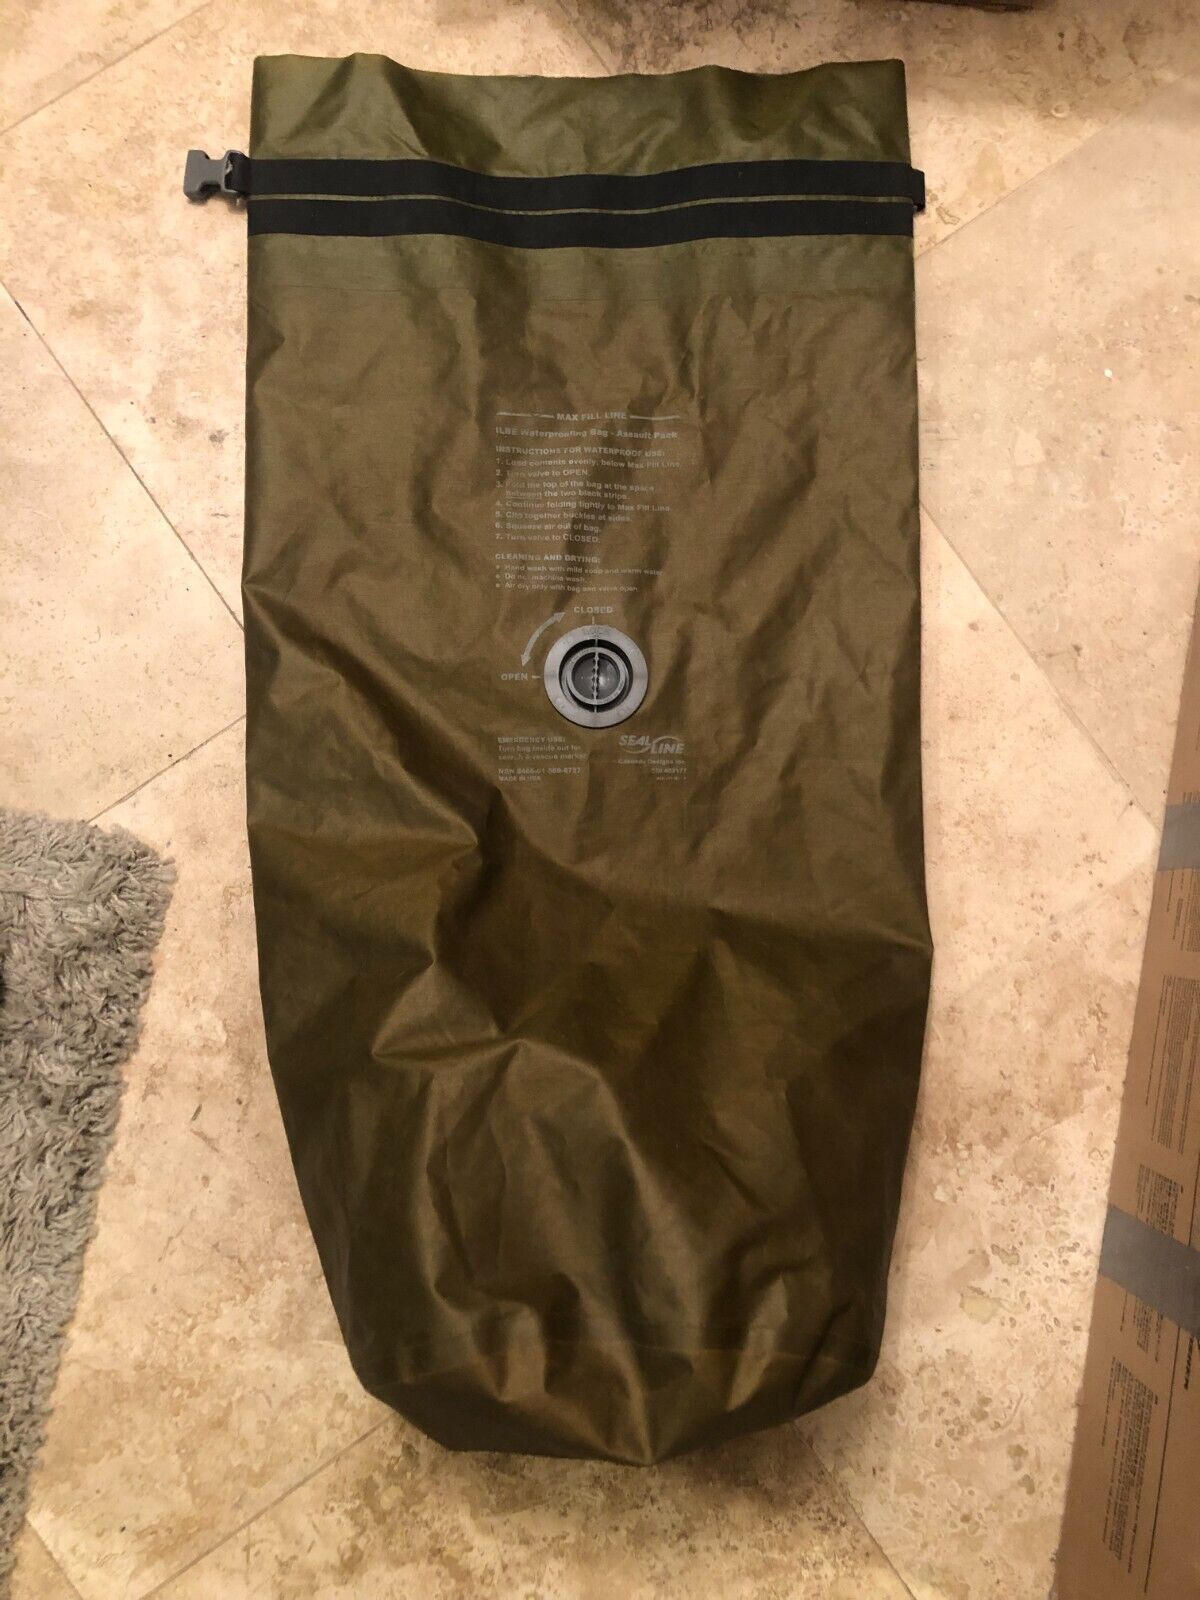 SEAL LINE Waterproof Assault Pack Liner/Compression Bag CDI# 02177